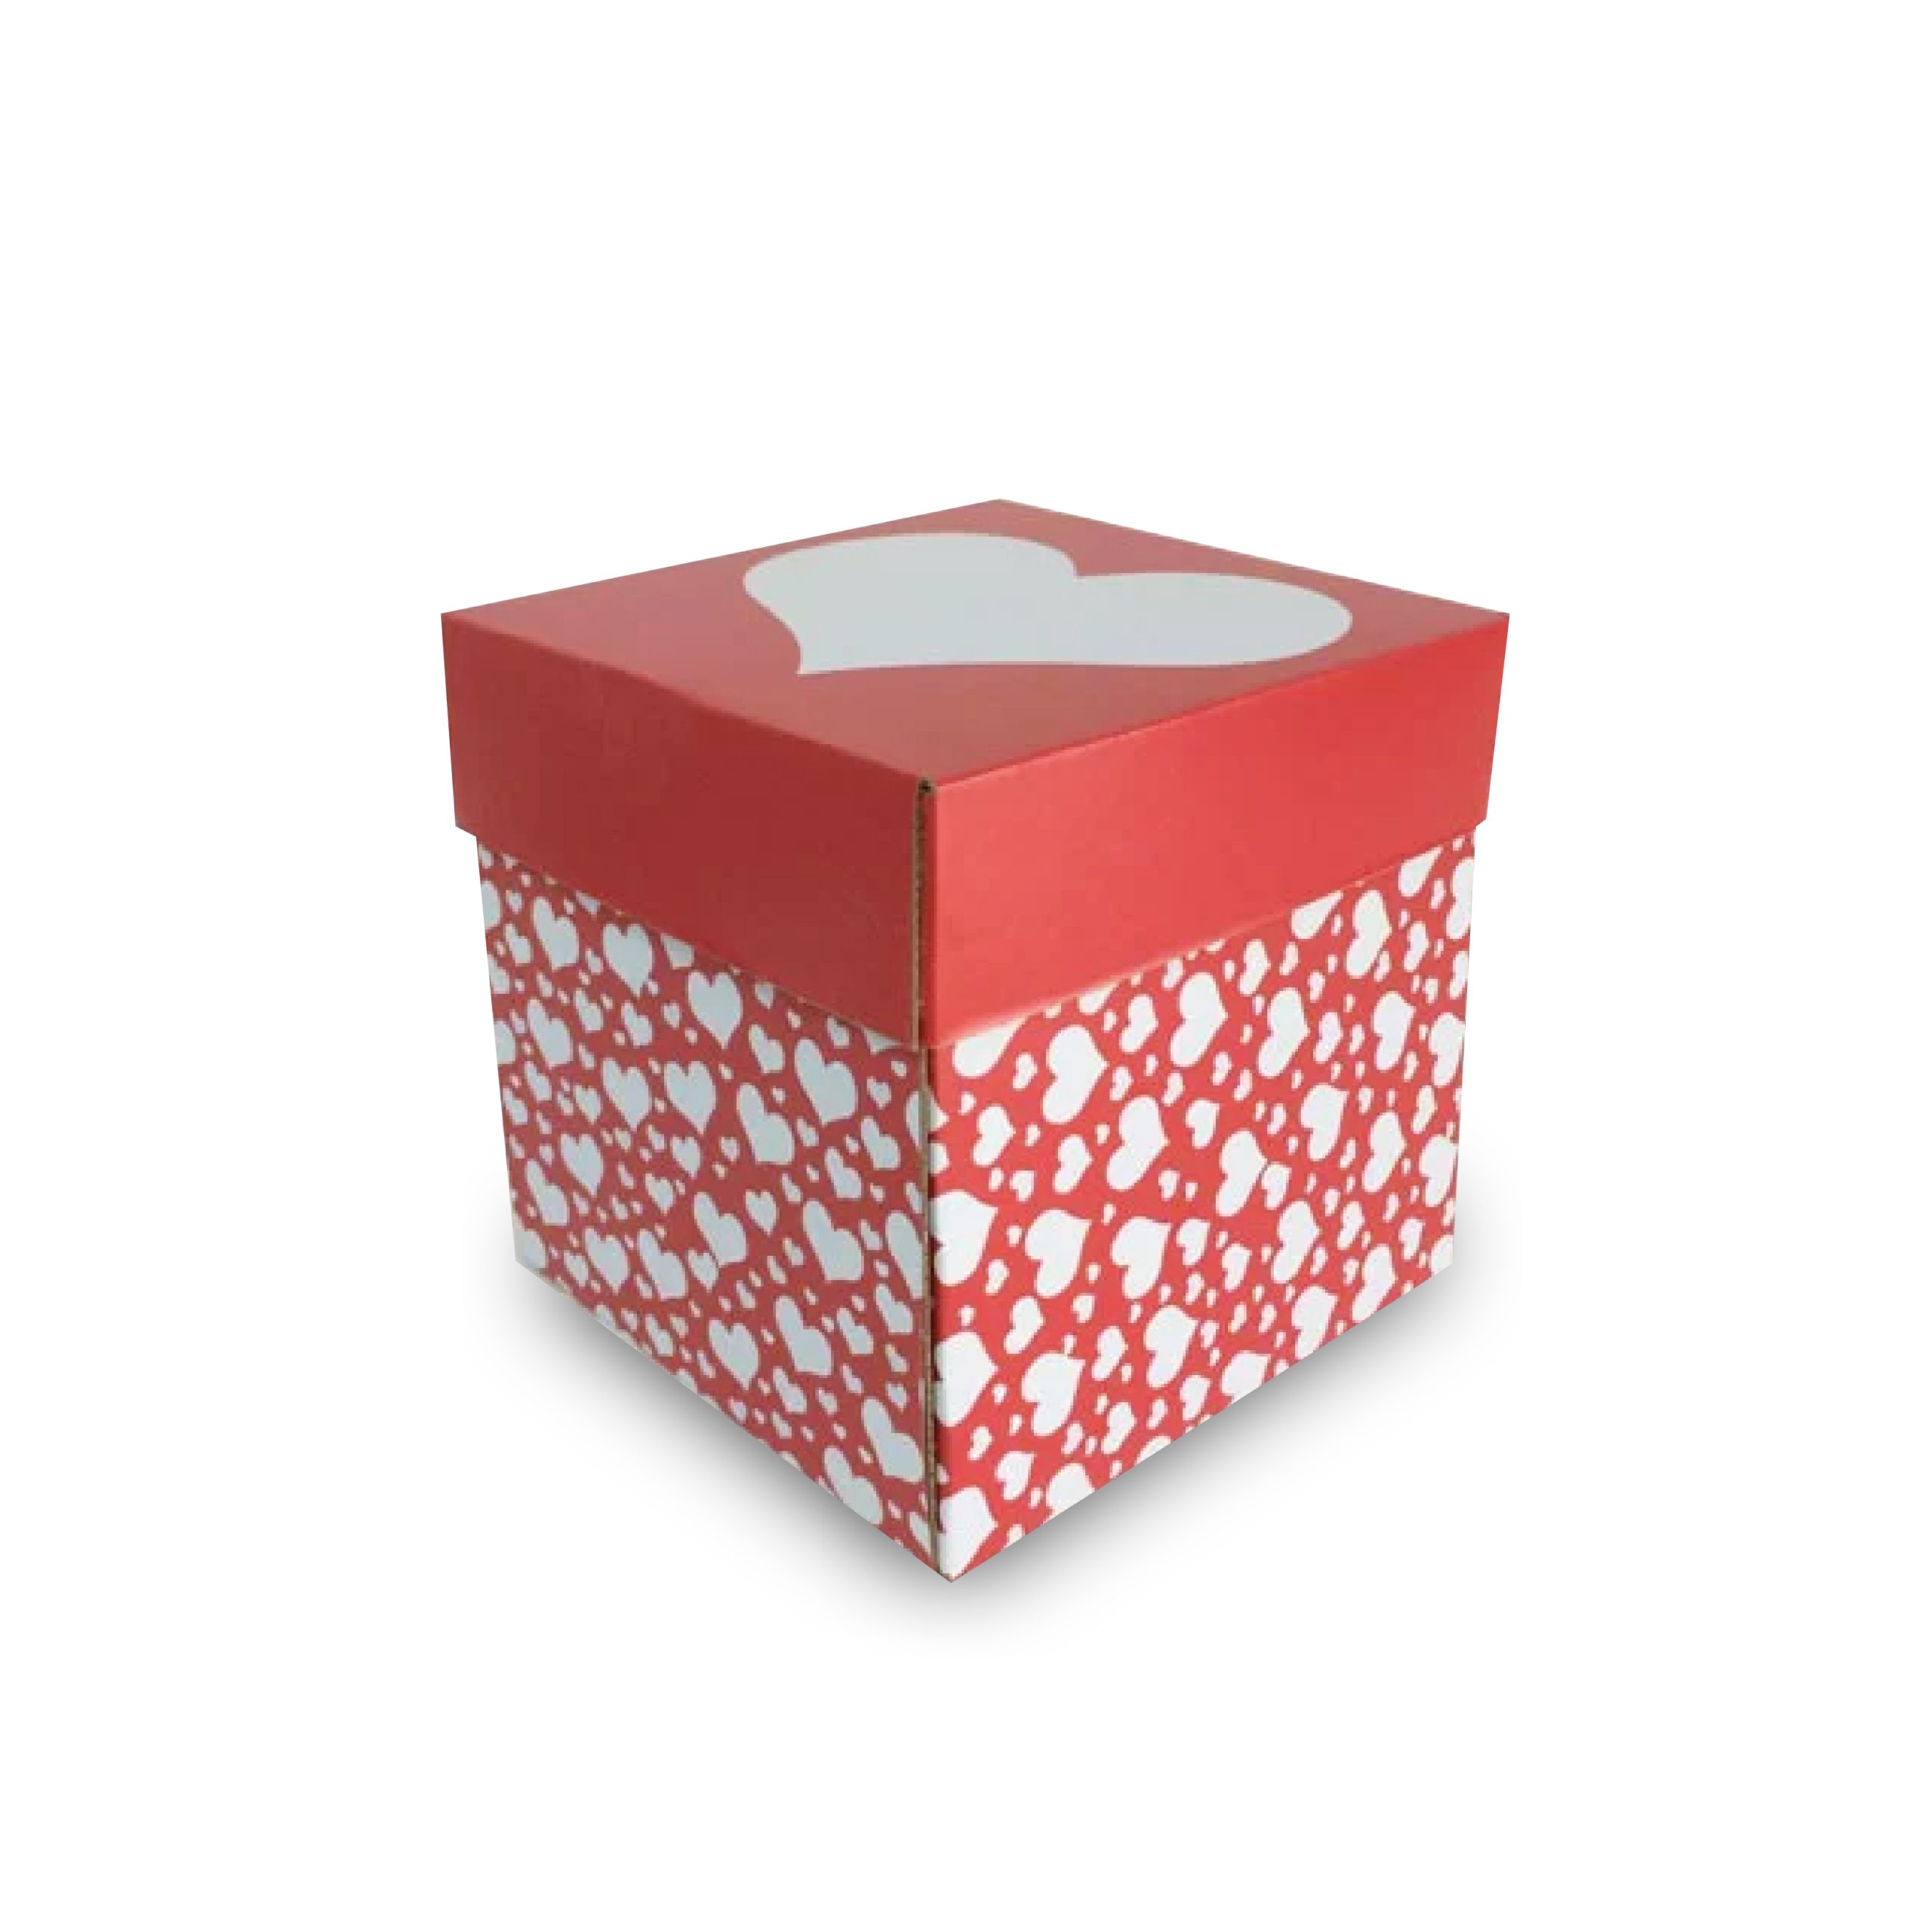 Caja de regalo personalizada de 21cm cúbicos impresa a color